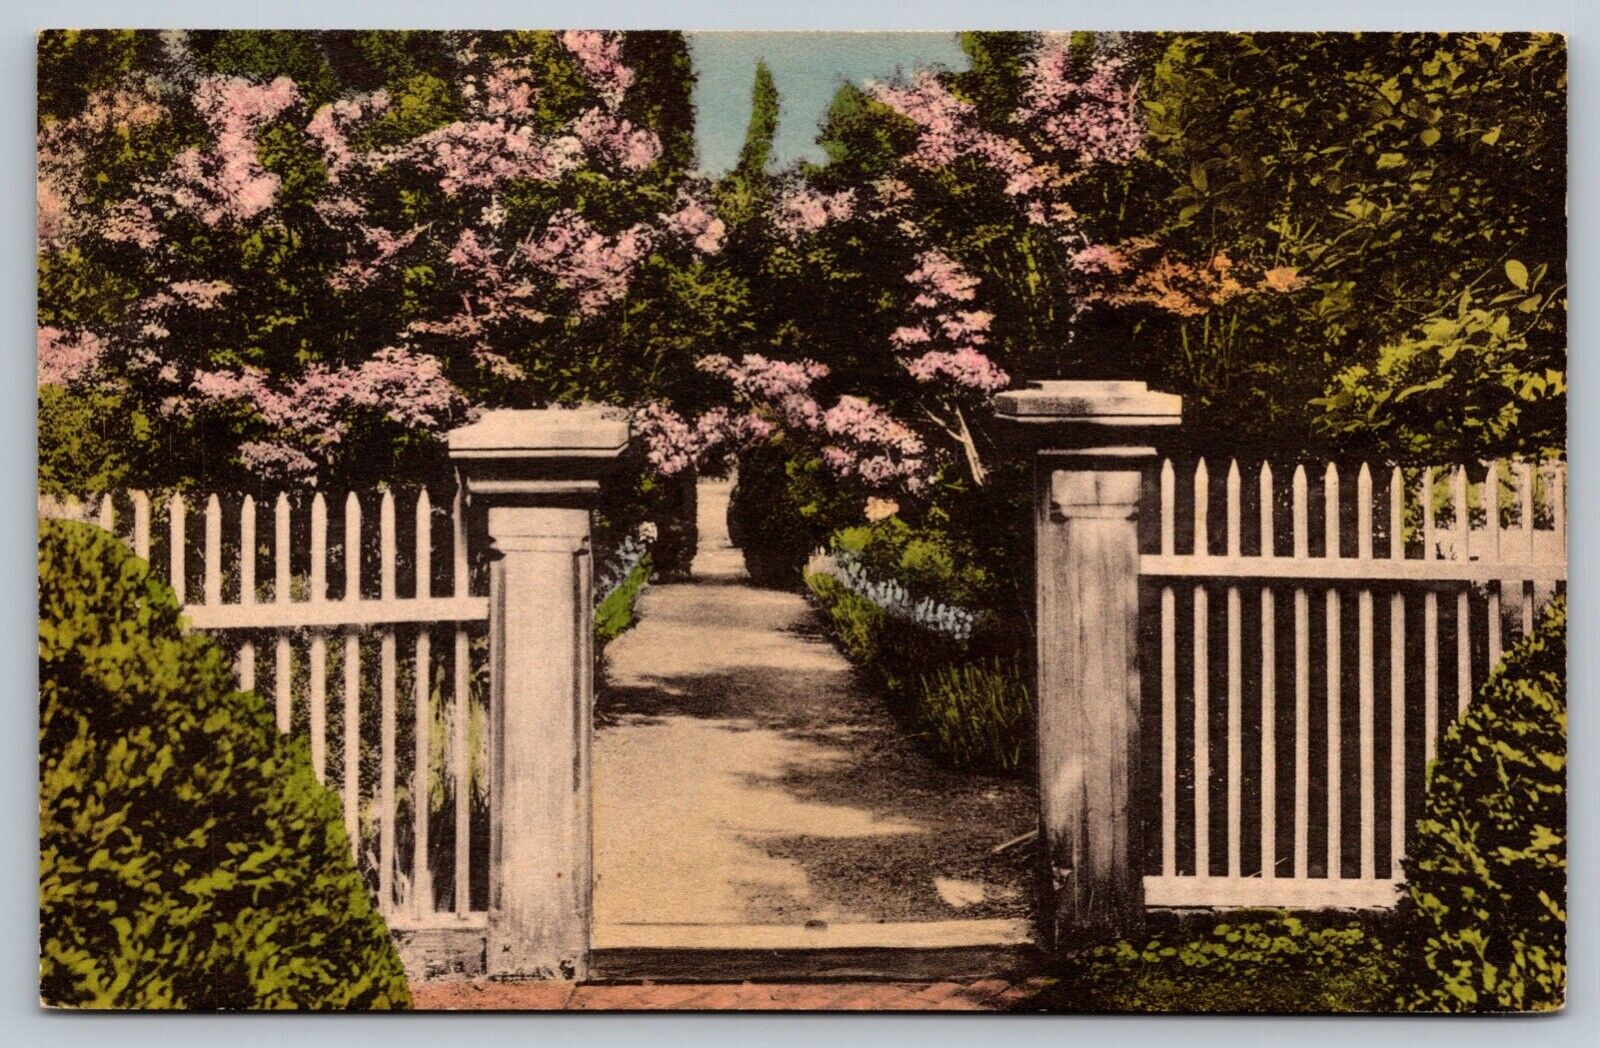 Entrance to Garden the Hermitage Nashville TN Hand Colored Vintage Postcard